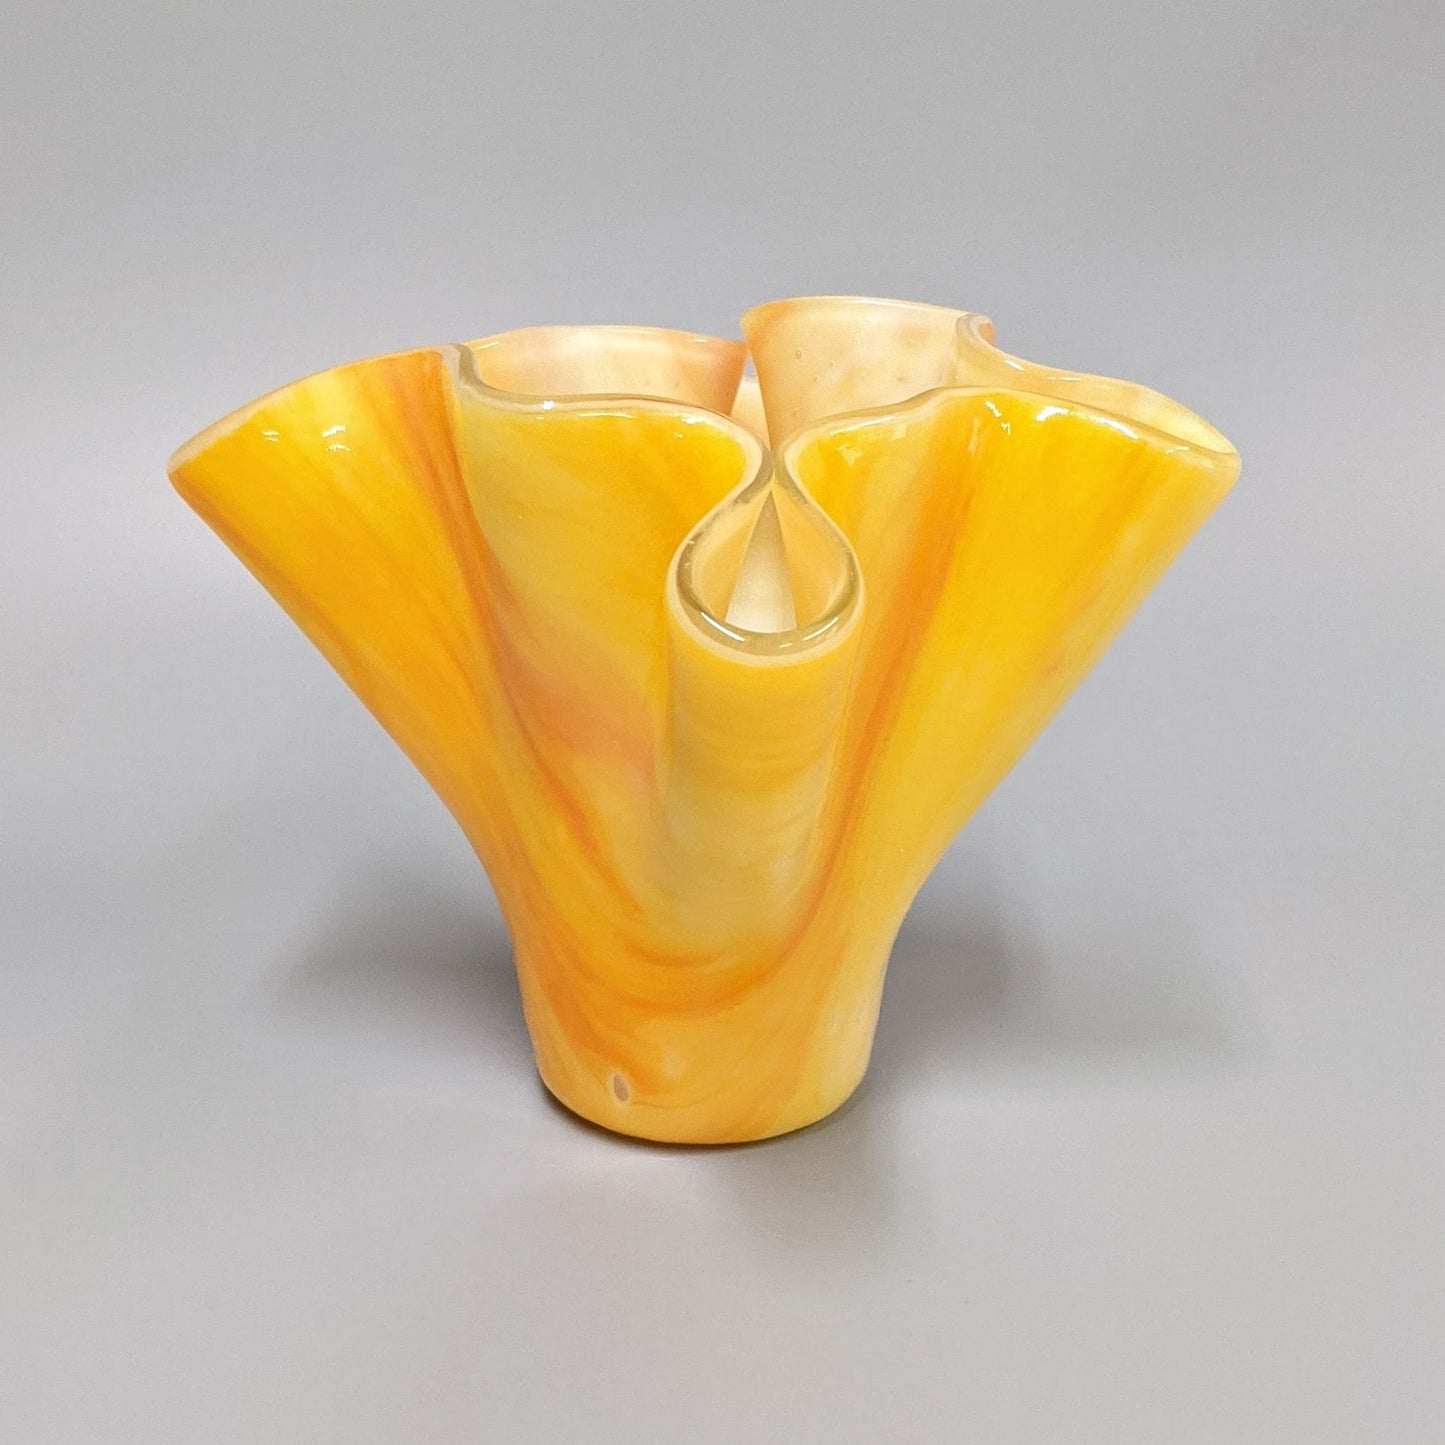 Modern Glass Art Vase in Sunset Orange and Yellow